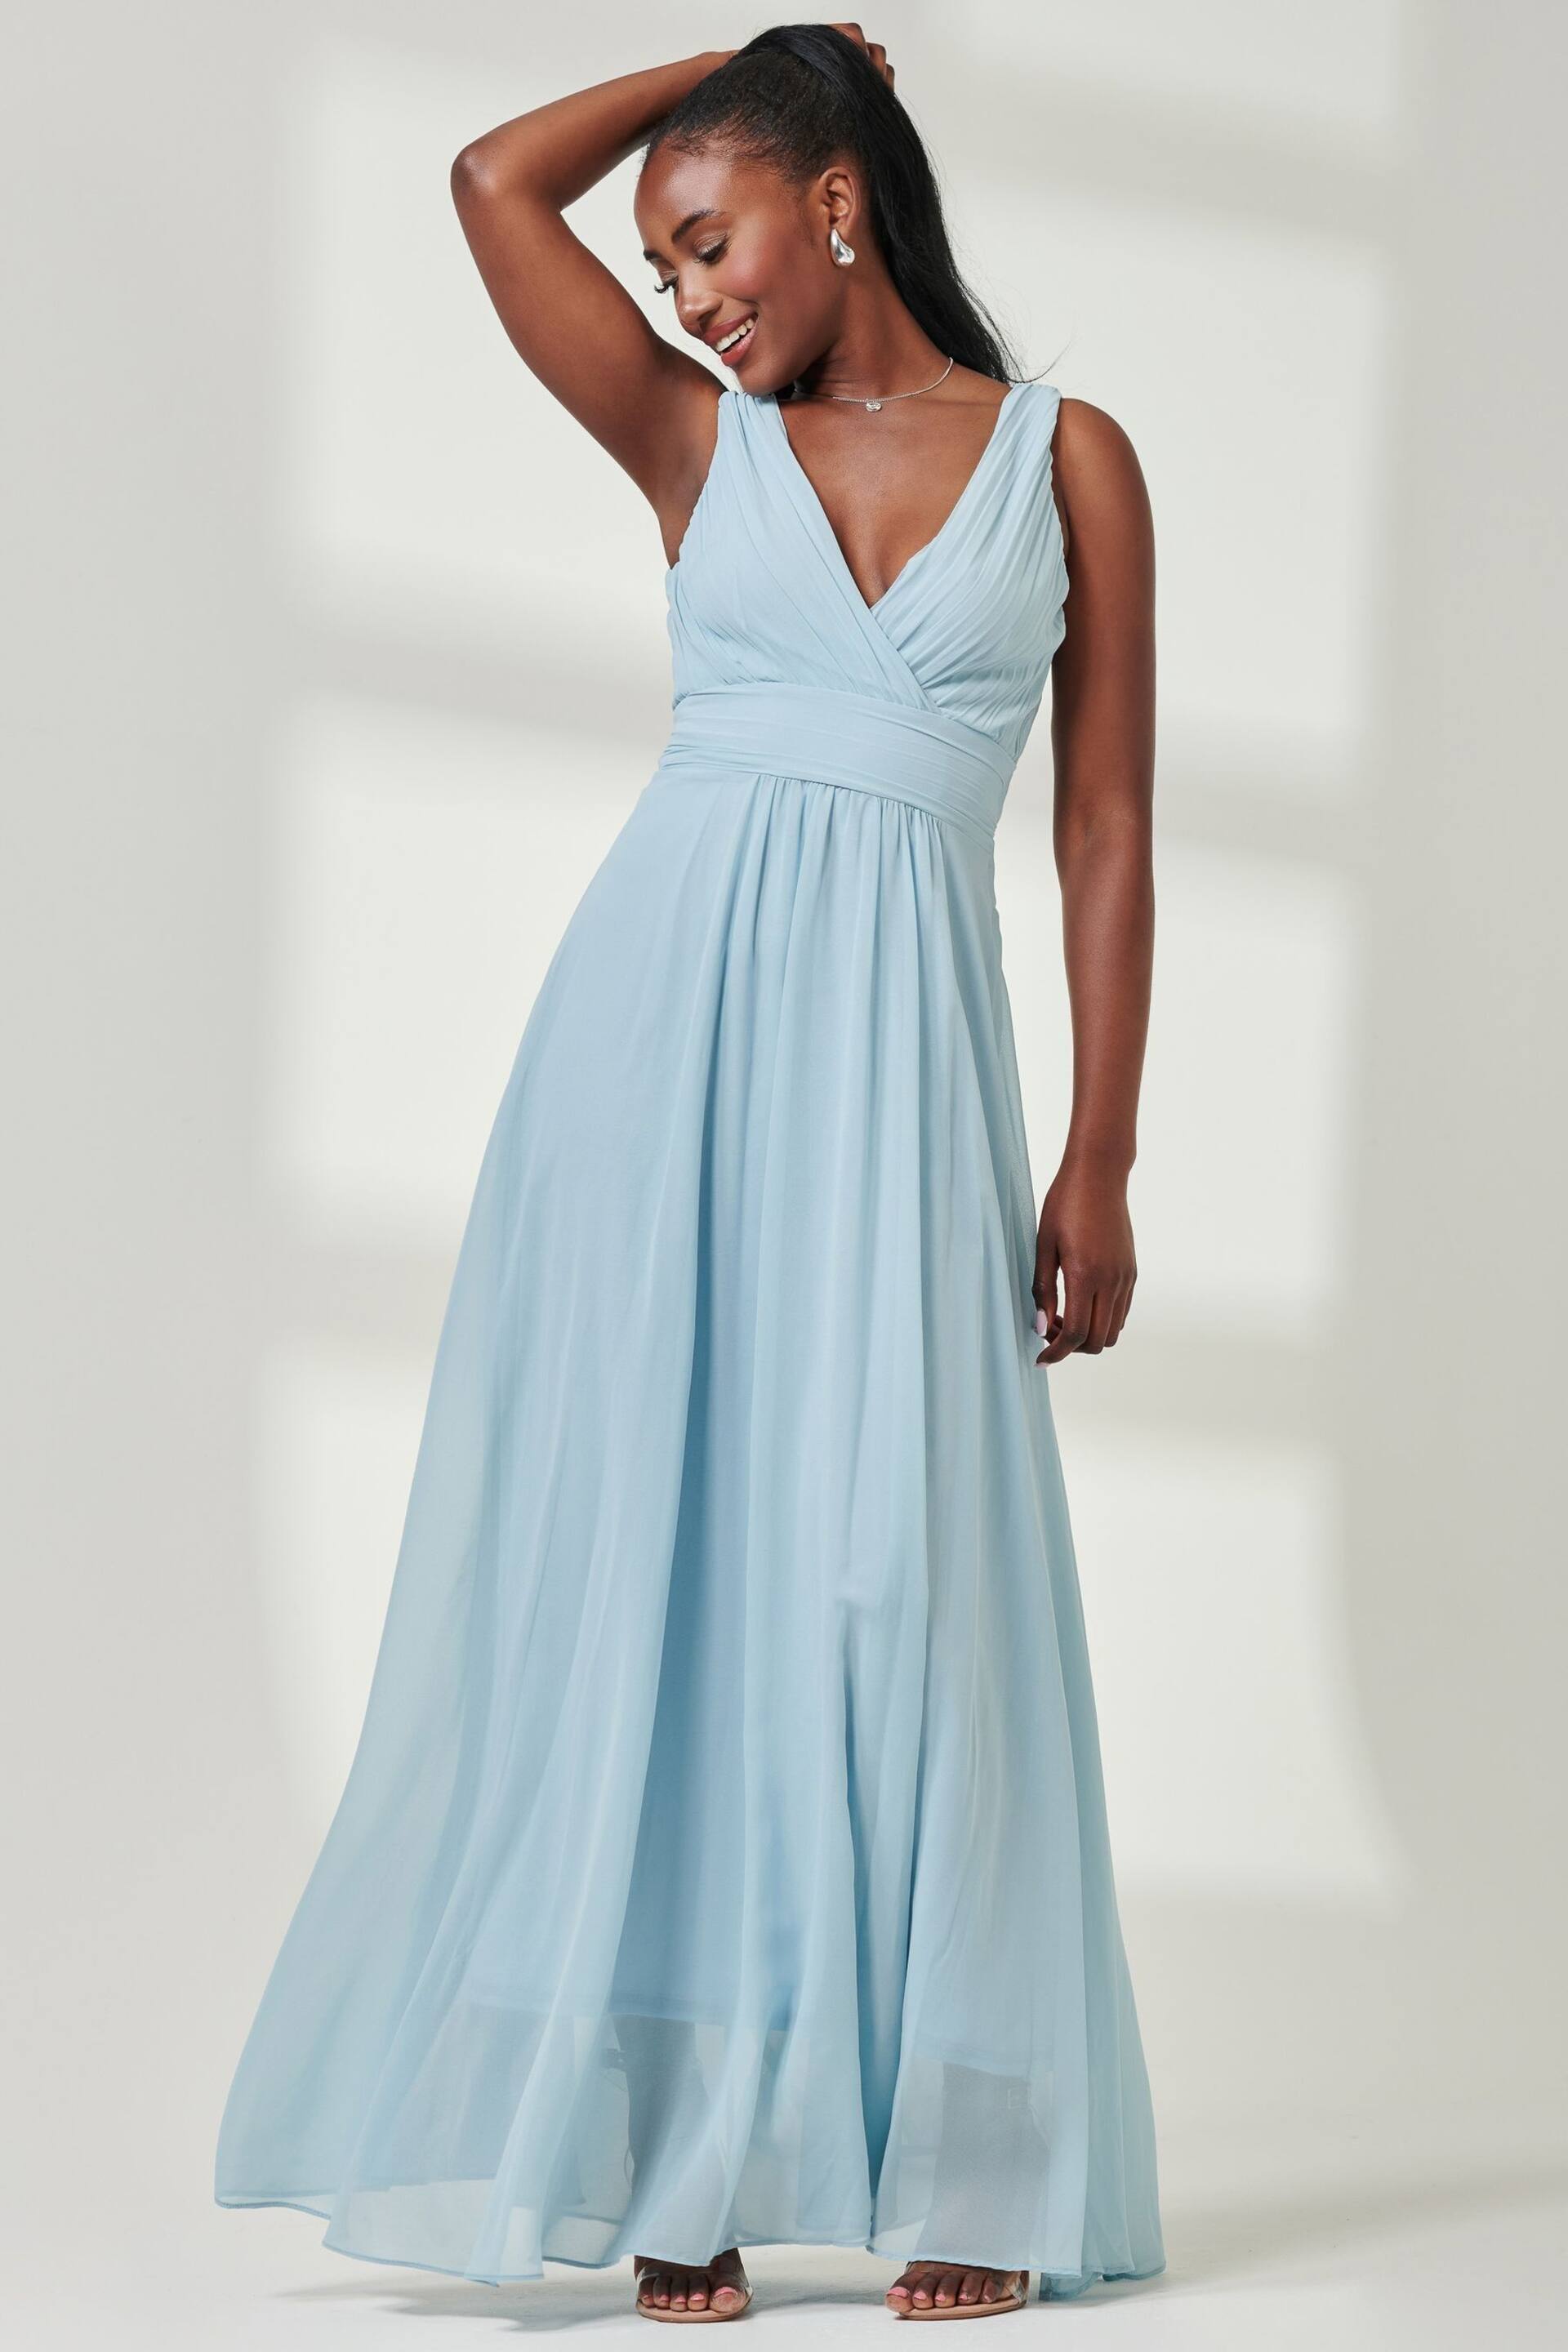 Jolie Moi Mid Blue Pleated Bodice Chiffon Maxi Dress - Image 6 of 6